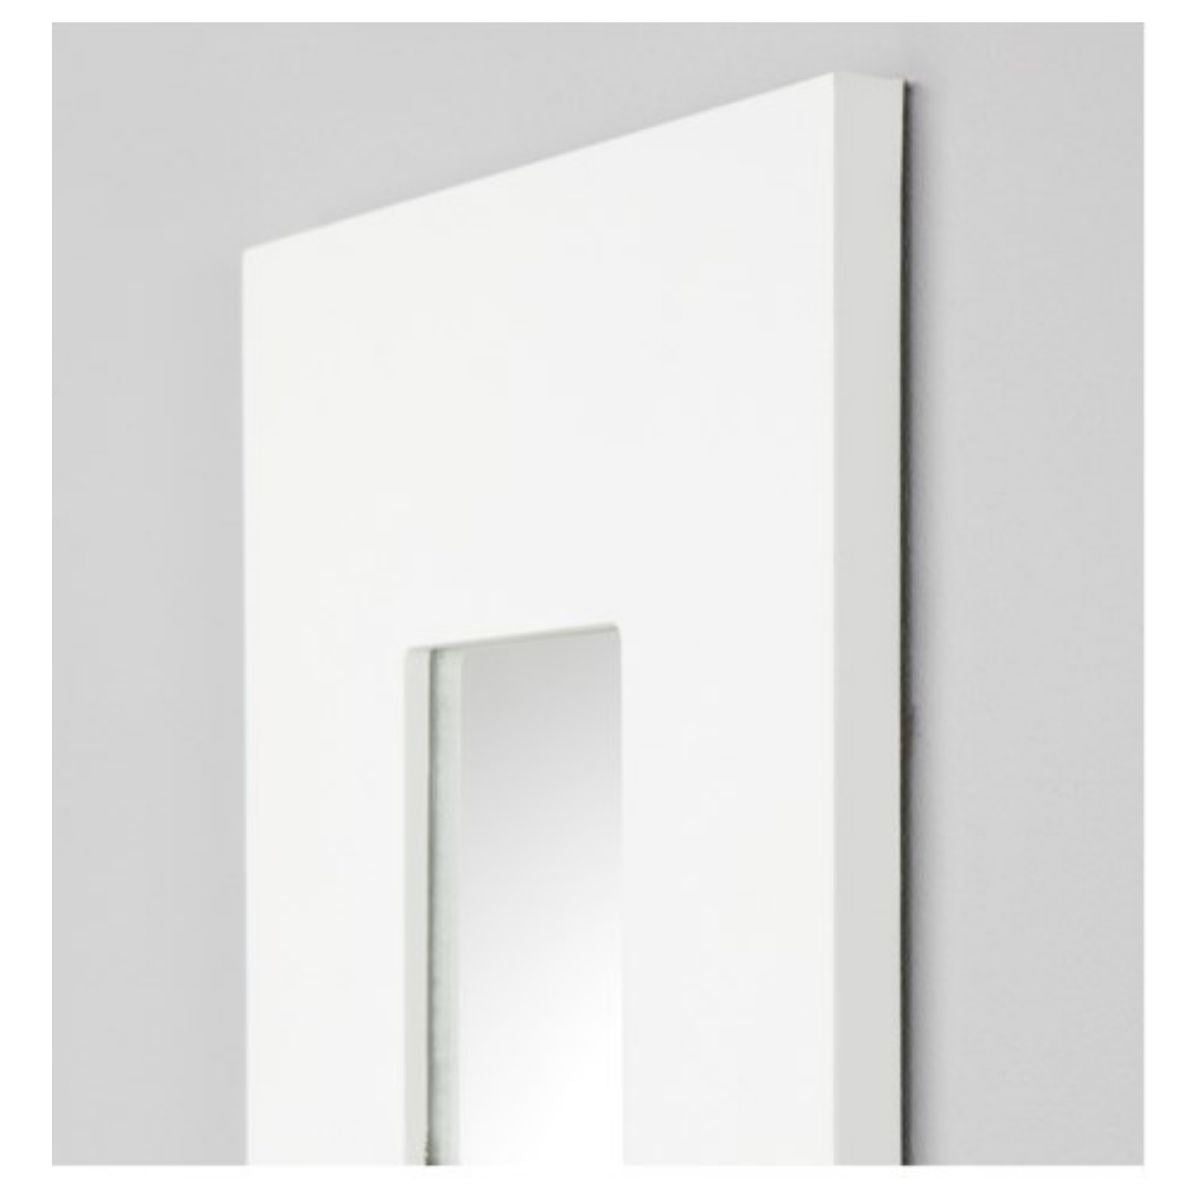 Base - White Mirror - 26x26cm